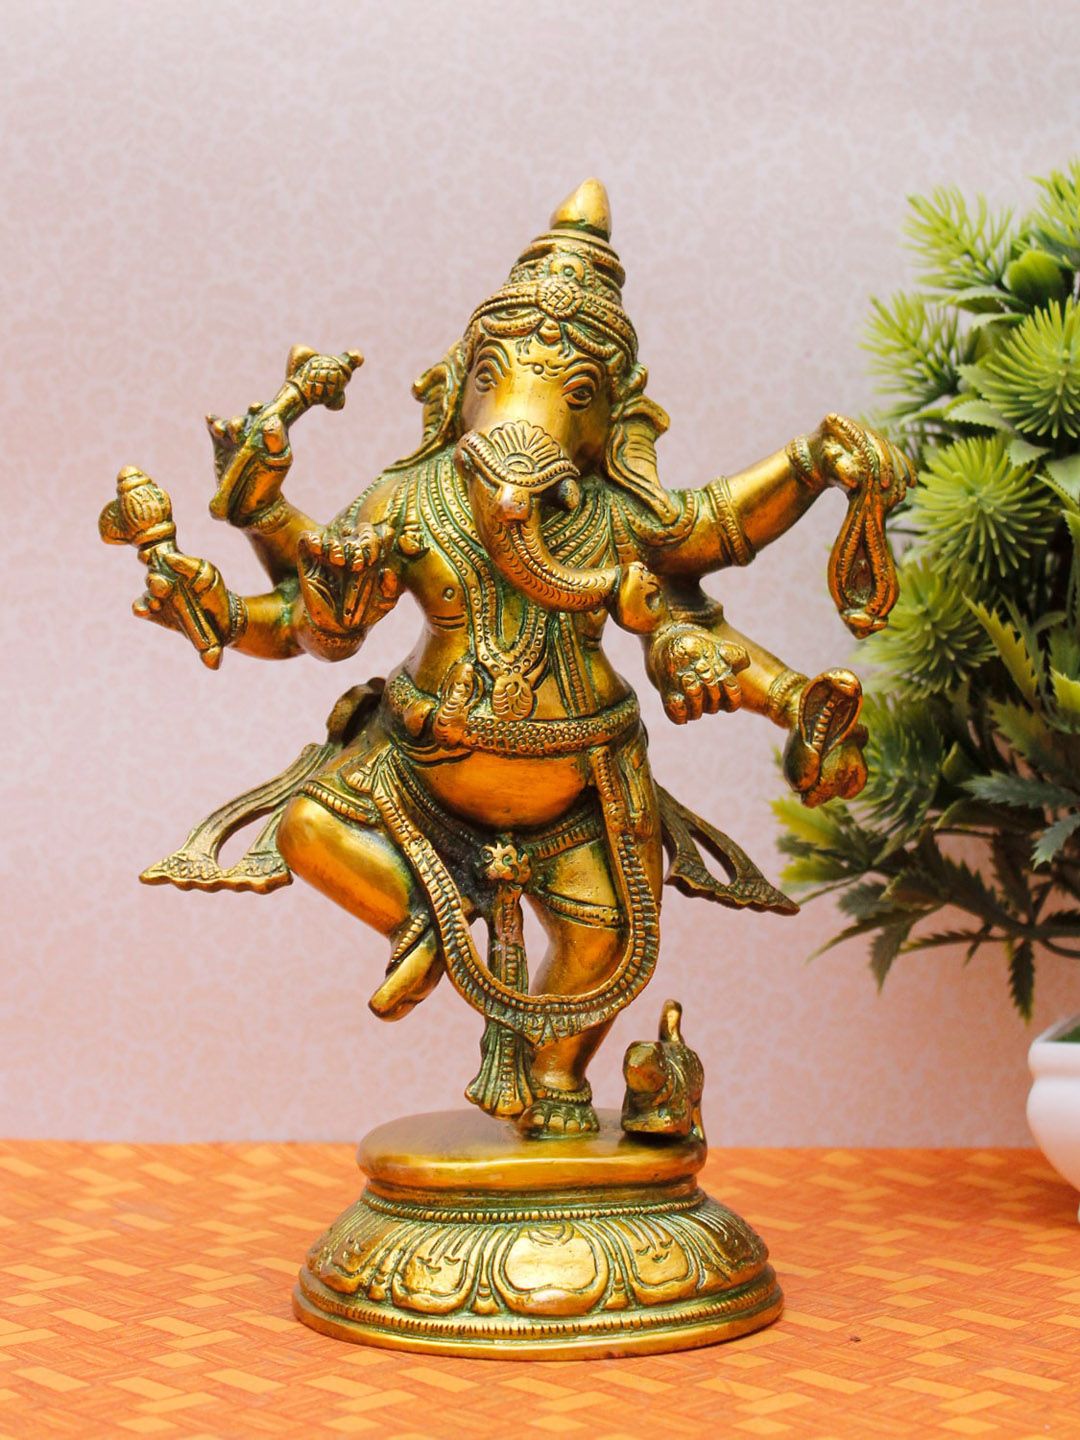 StatueStudio Green & Gold Dancing Ganpati Idol Showpiece Price in India